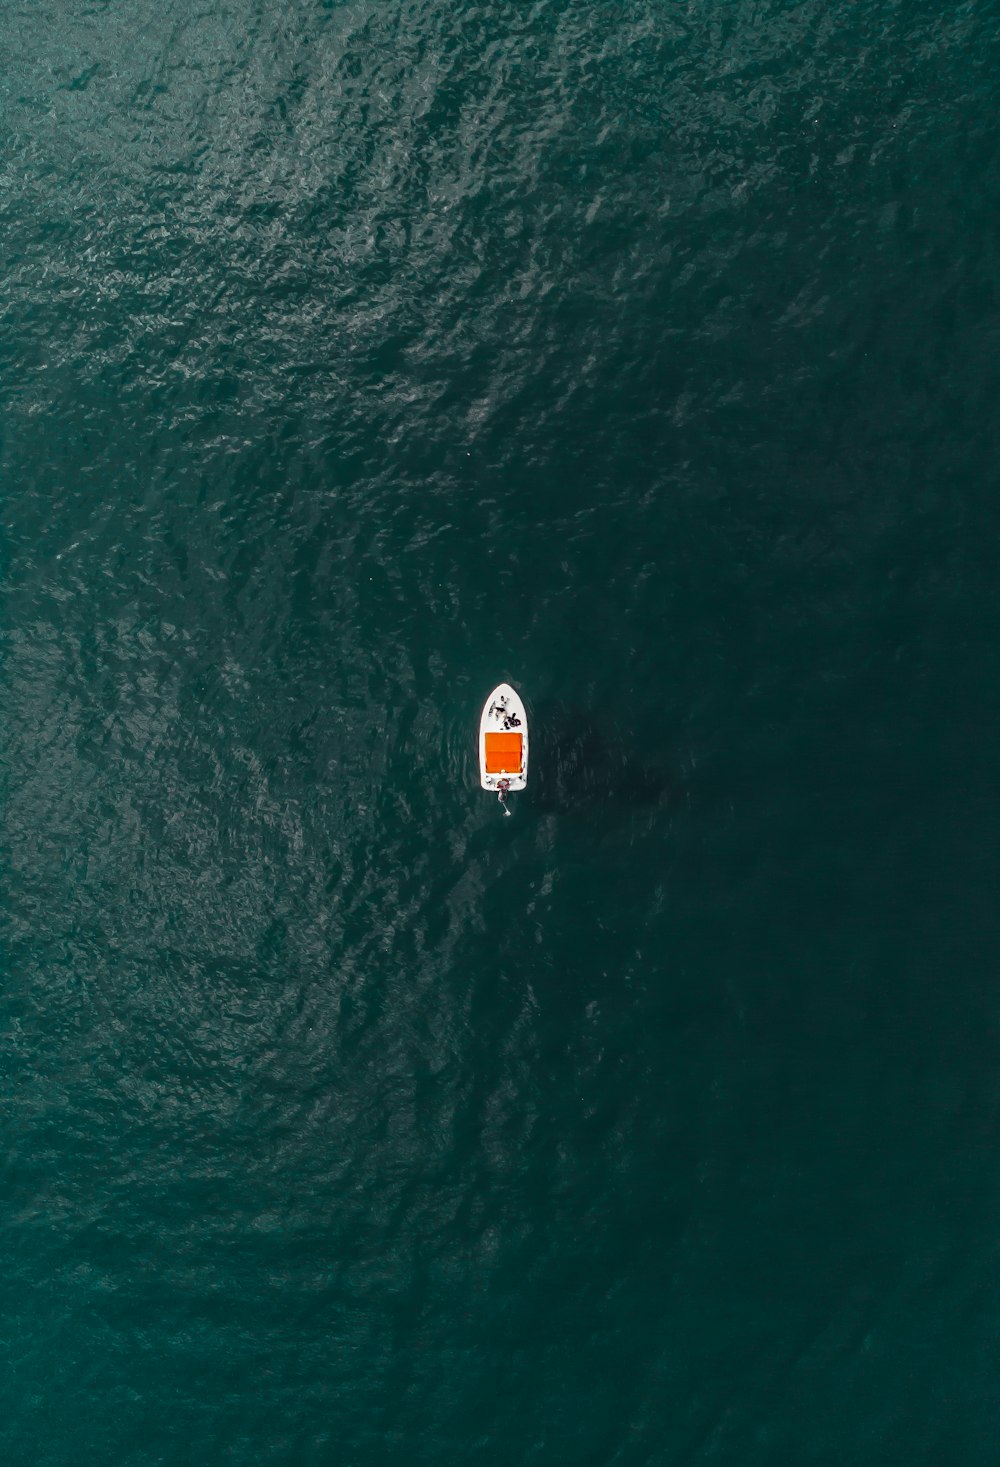 veleiro branco e laranja no meio do oceano